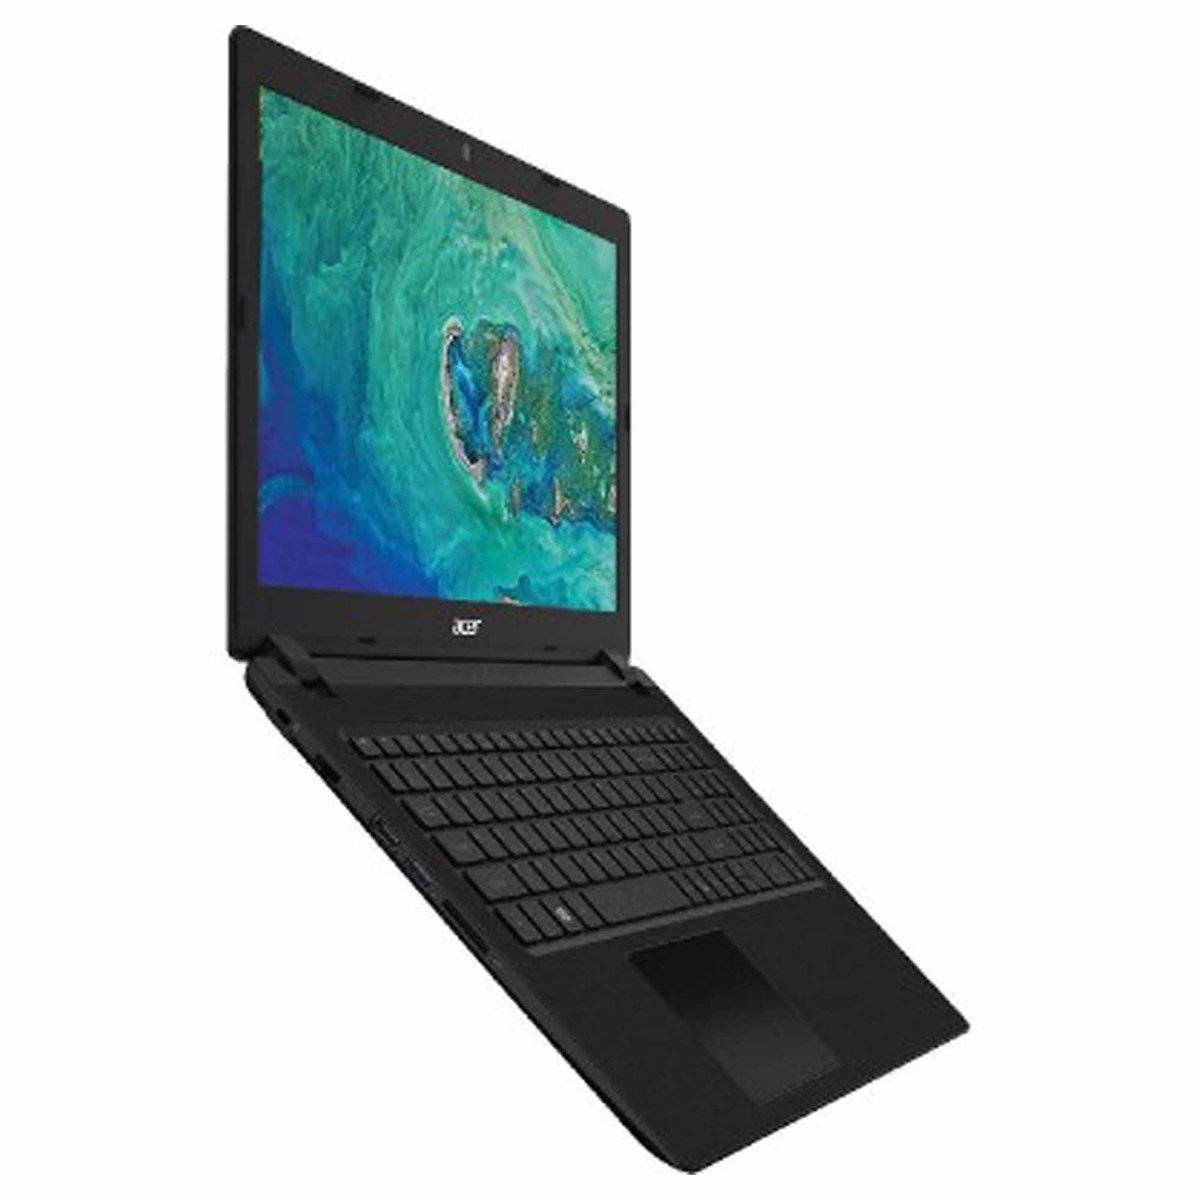 Acer Notebook Aspire 315-NXH18EM011 Core i5 Black